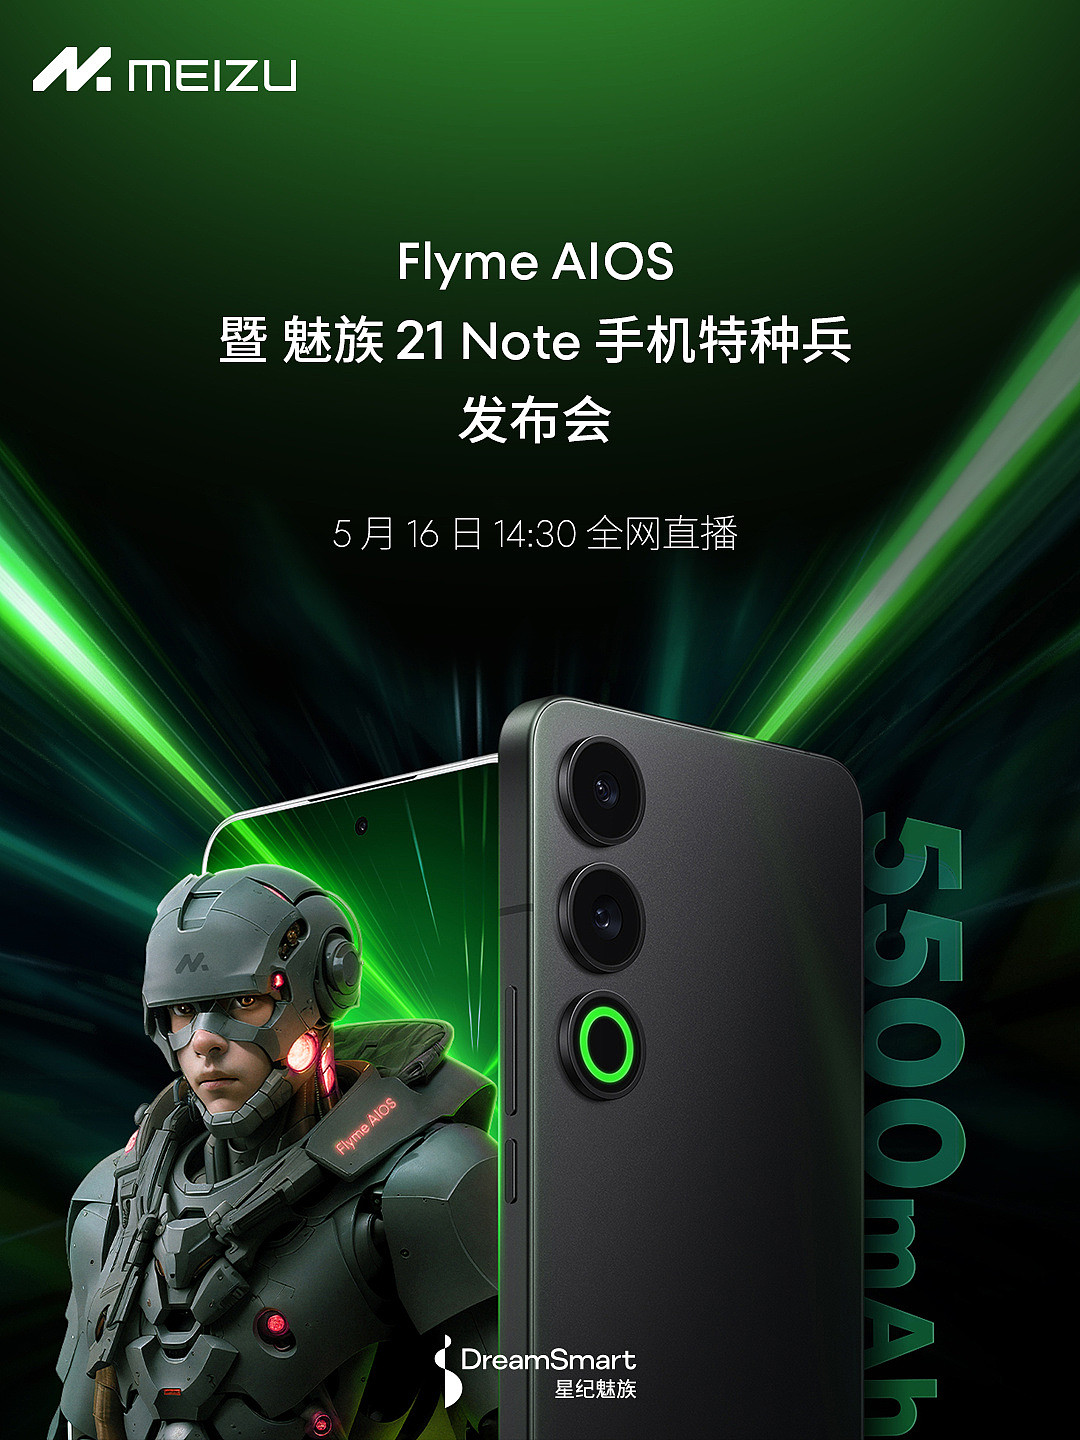 为 AI 铺路，魅族 Flyme OS 微信公众号更名 Flyme AIOS - 2